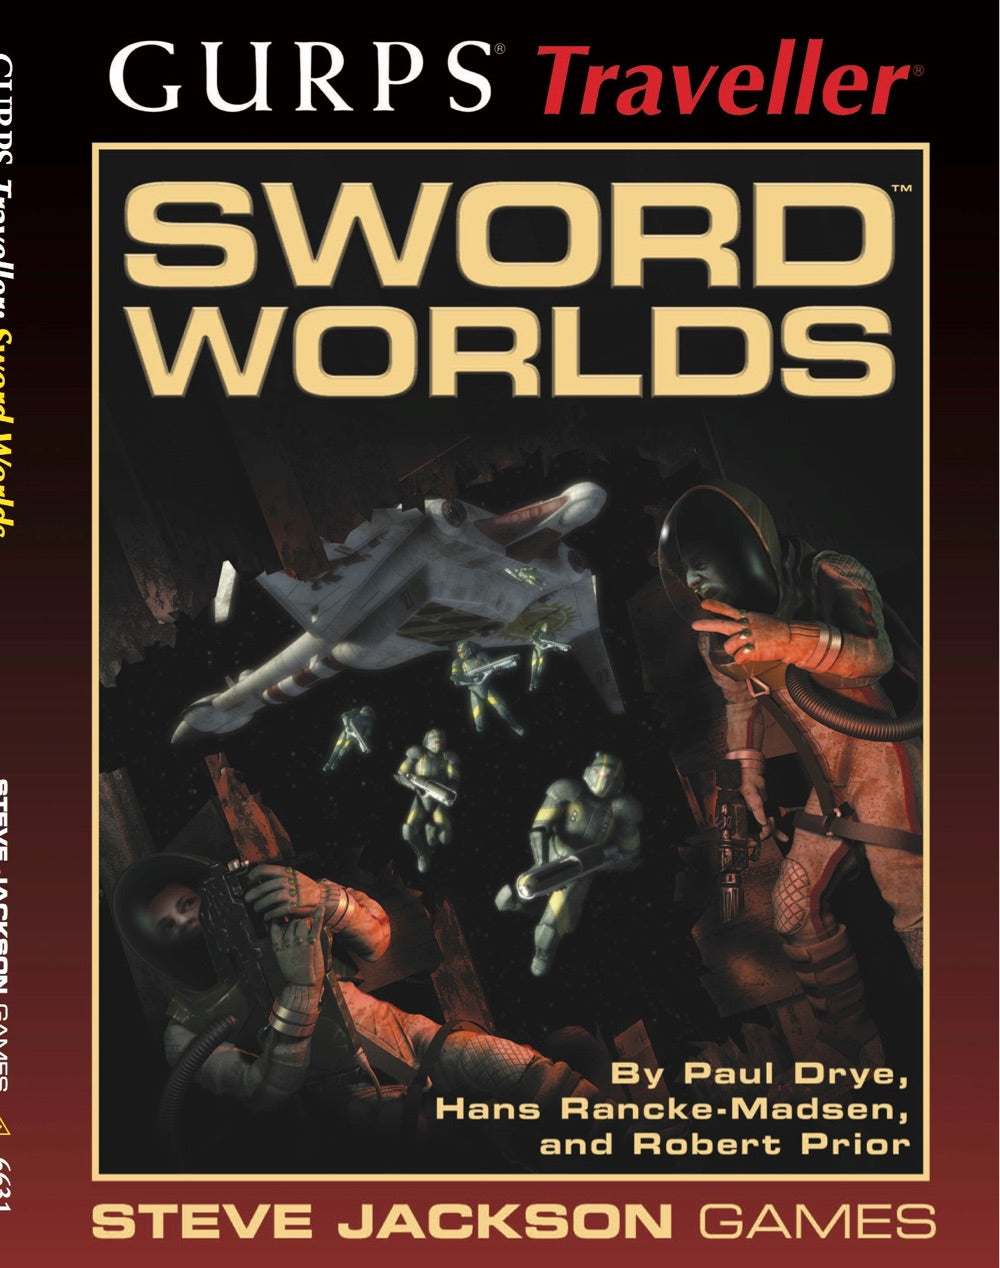 GURPS Traveller Classic: Sword Worlds